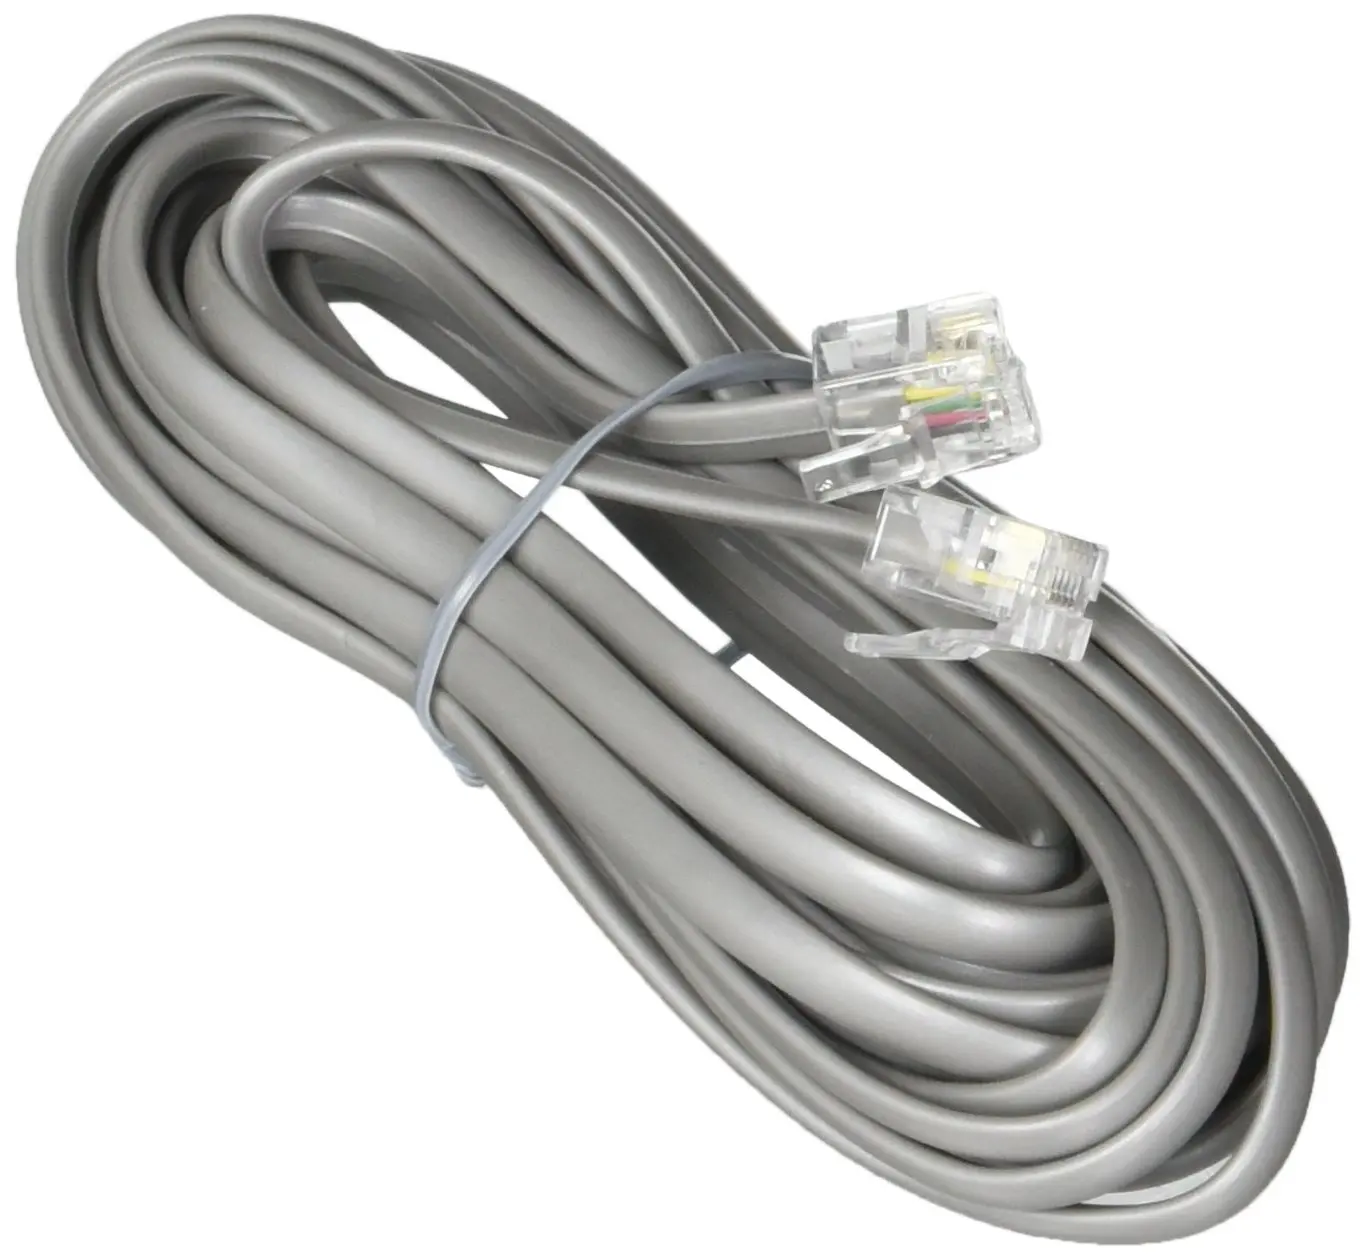 5X  6P4C RJ11 8in NewJumper Cord Cable Wire Modem Phone Silver Short 4-wire 